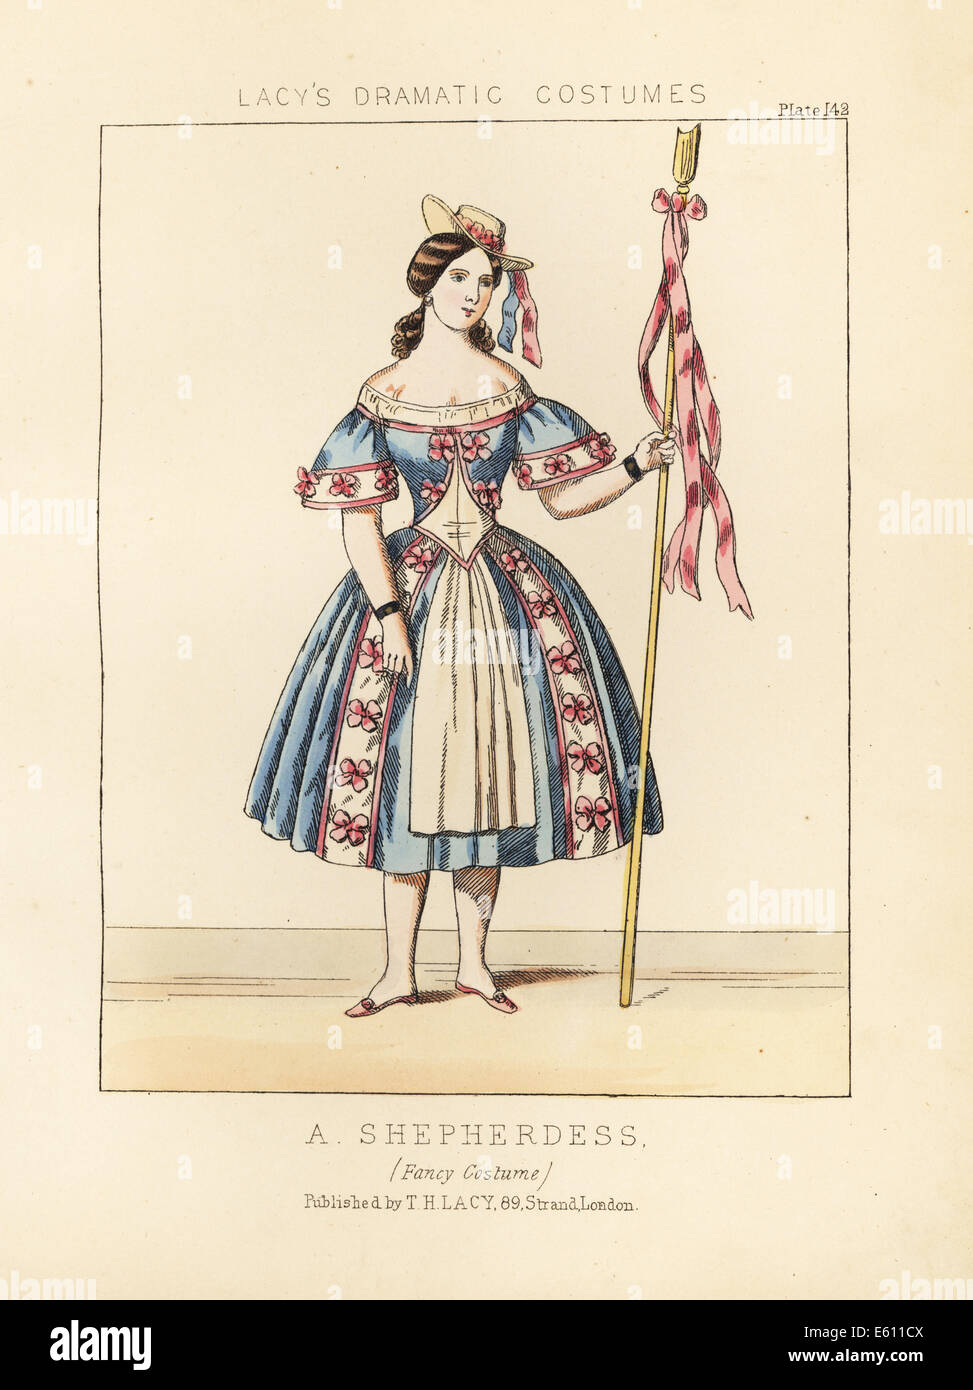 Shepherdess, fancy dress costume, 19th century. Stock Photo